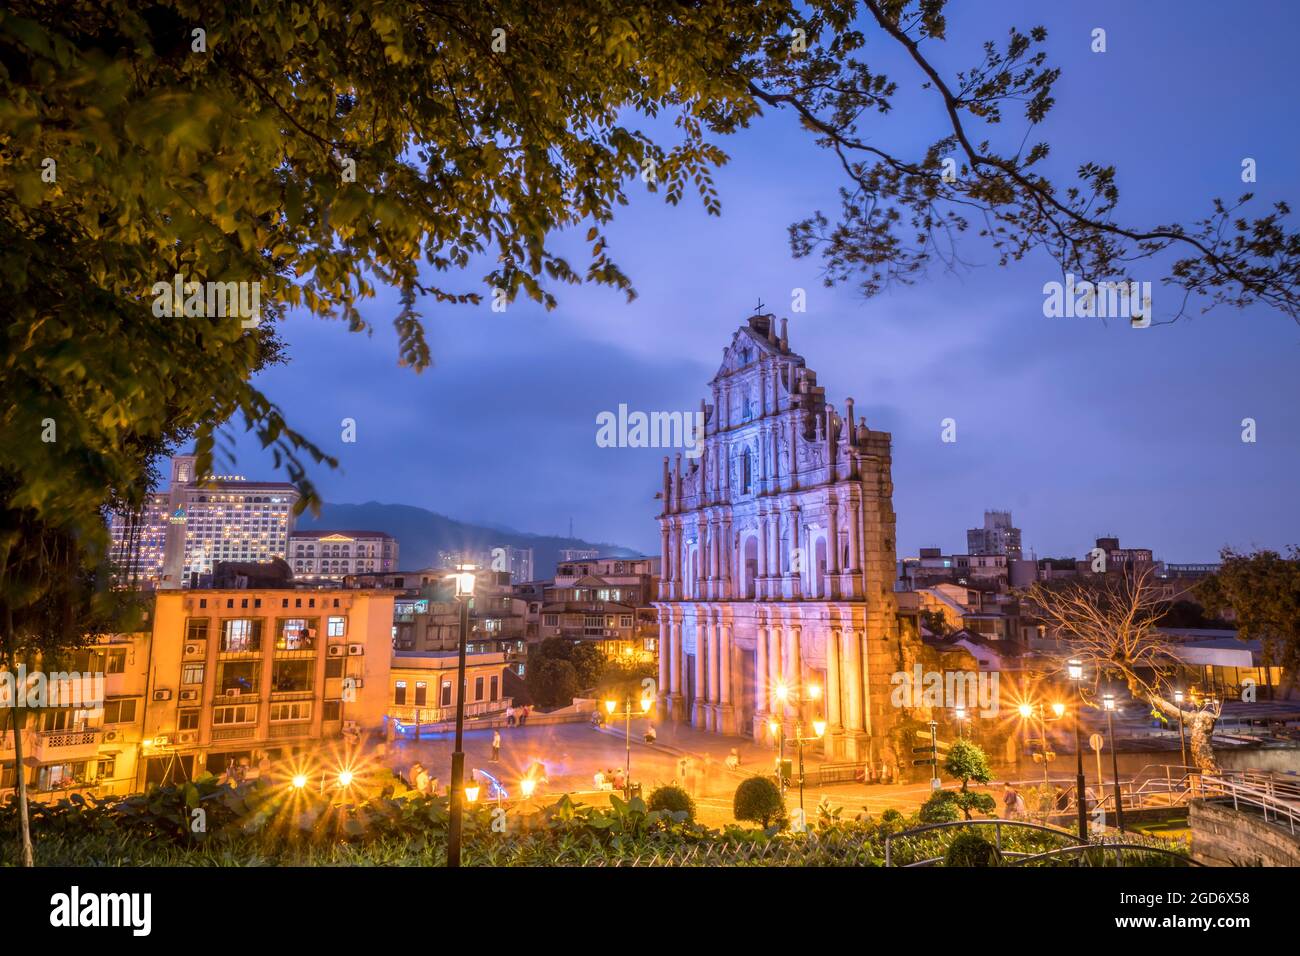 Ruinen von St. Paul's, Macau Stockfoto